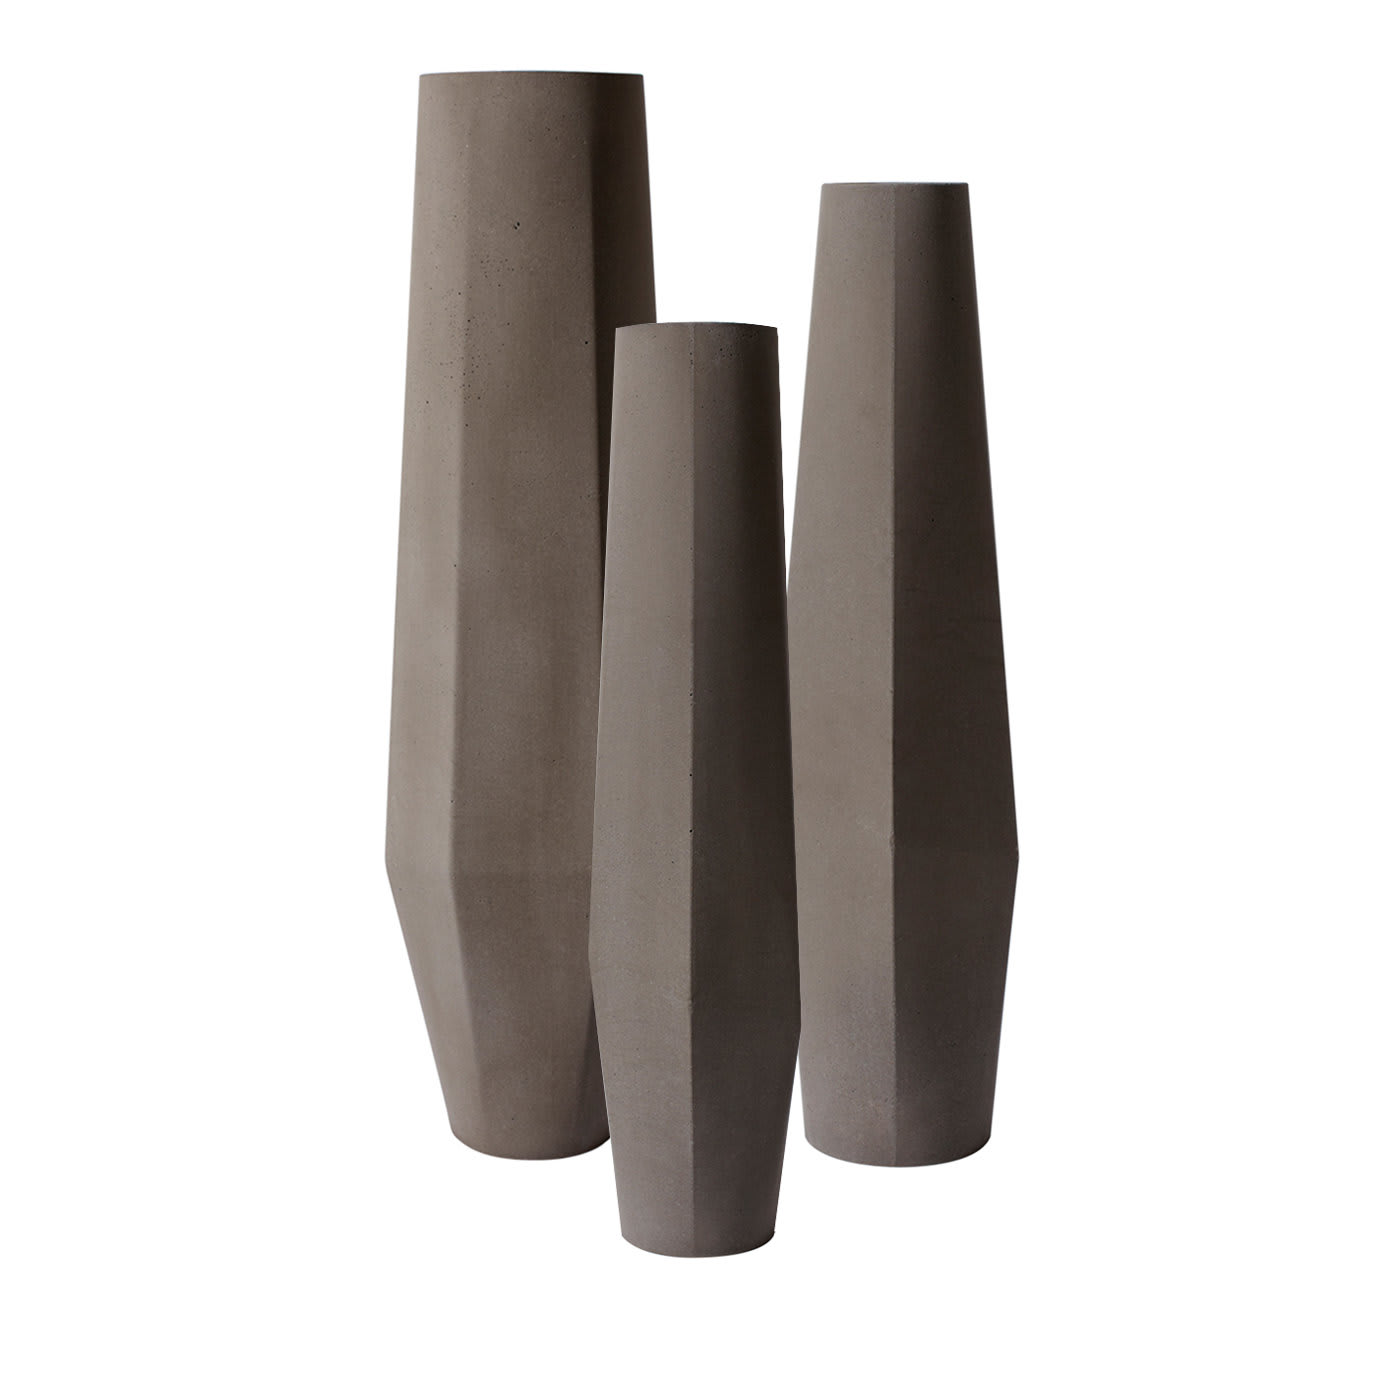 Marchigüe Gray Vase Set of 3  - Stefano Pugliese